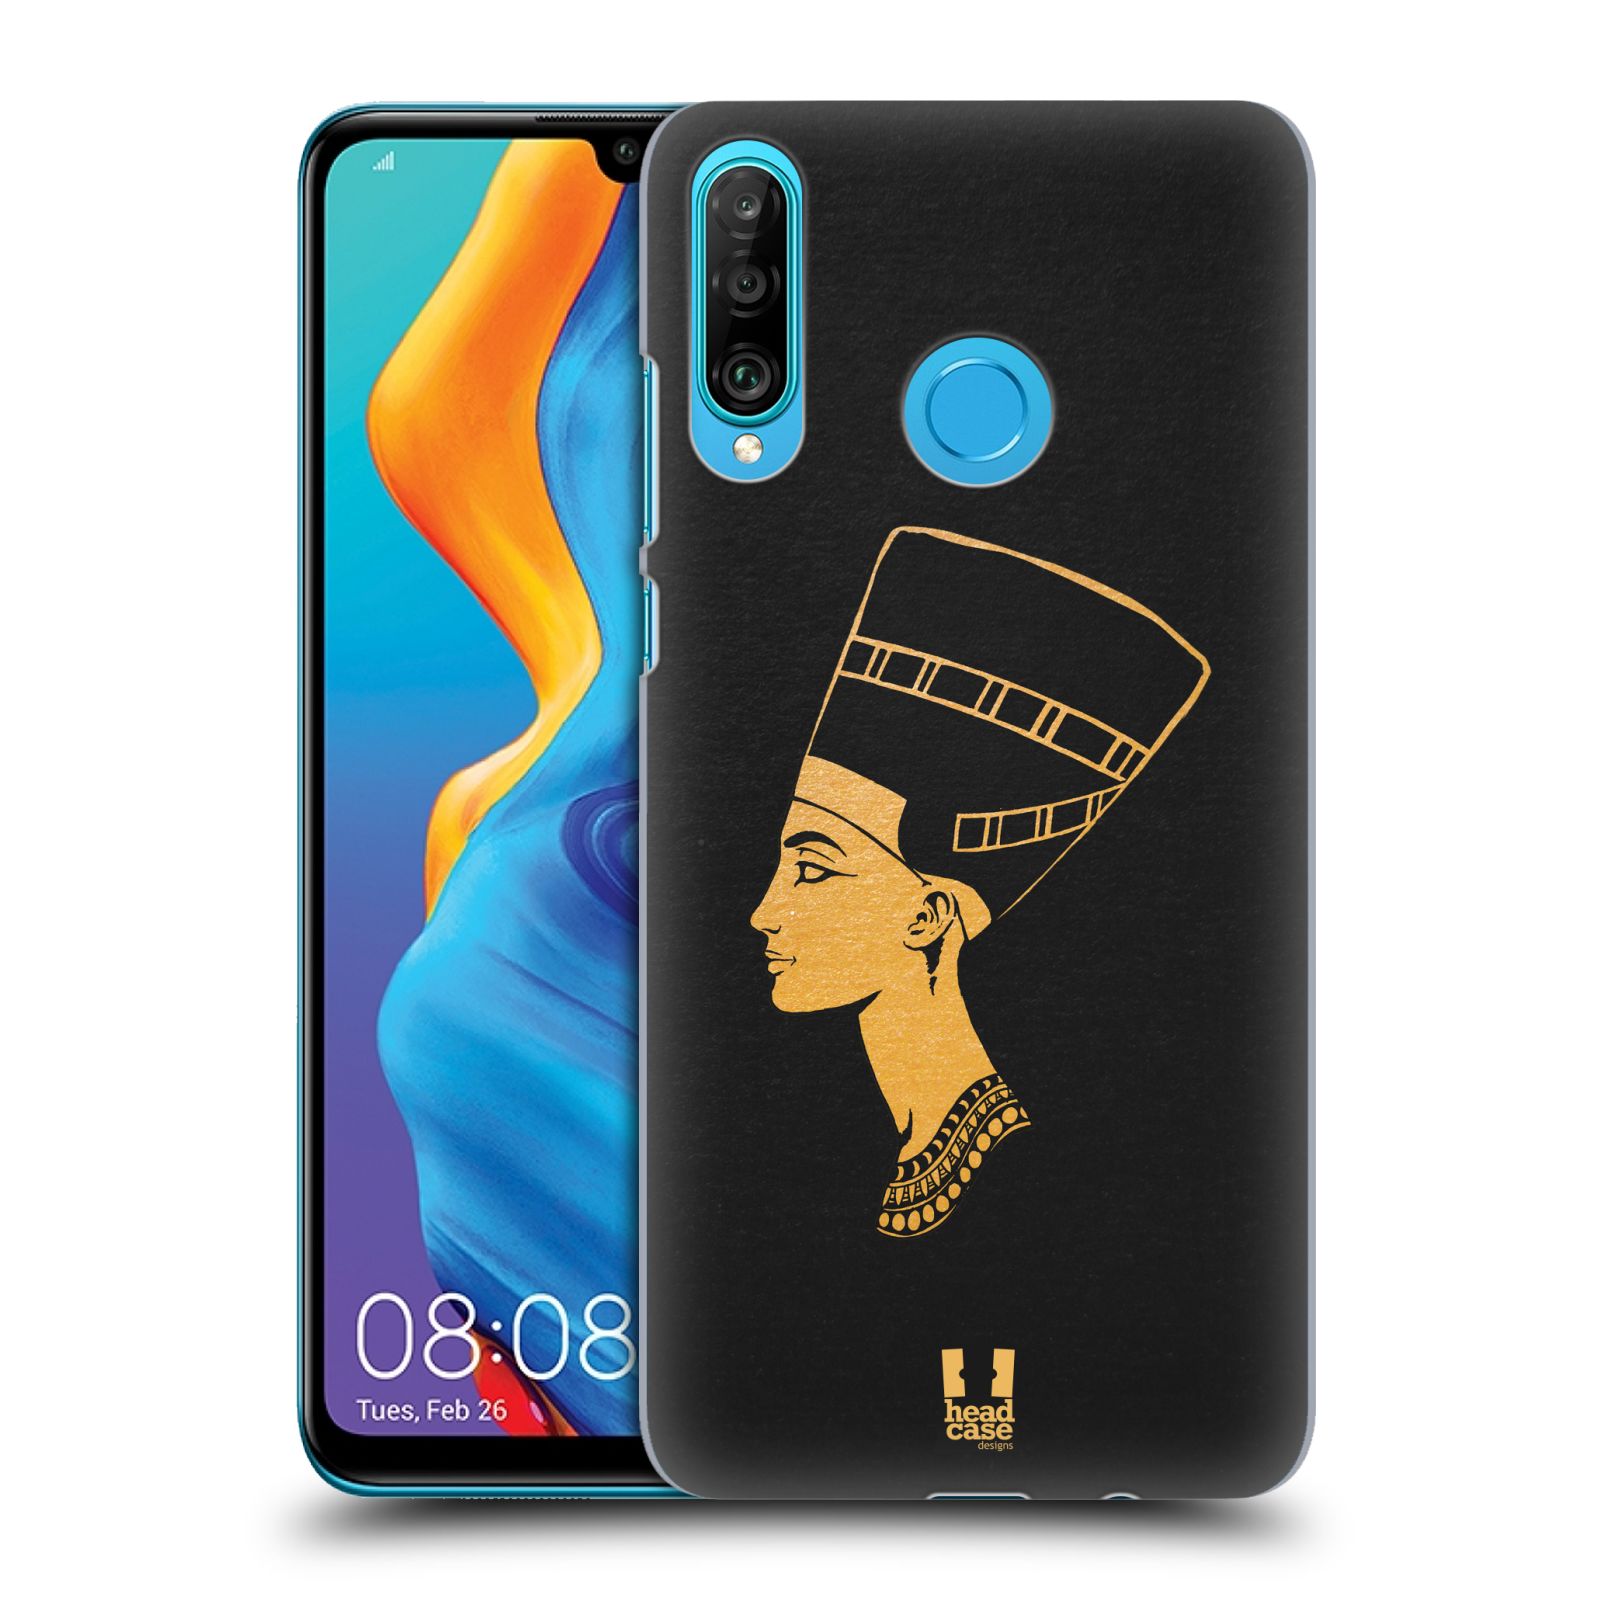 Plastové pouzdro na mobil Huawei P30 Lite - Head Case - EGYPT NEFERTITI (Plastový kryt, pouzdro, obal na mobilní telefon Huawei P30 Lite Dual Sim (MAR-L01A, MAR-L21A, MAR-LX1A) s motivem EGYPT NEFERTITI)